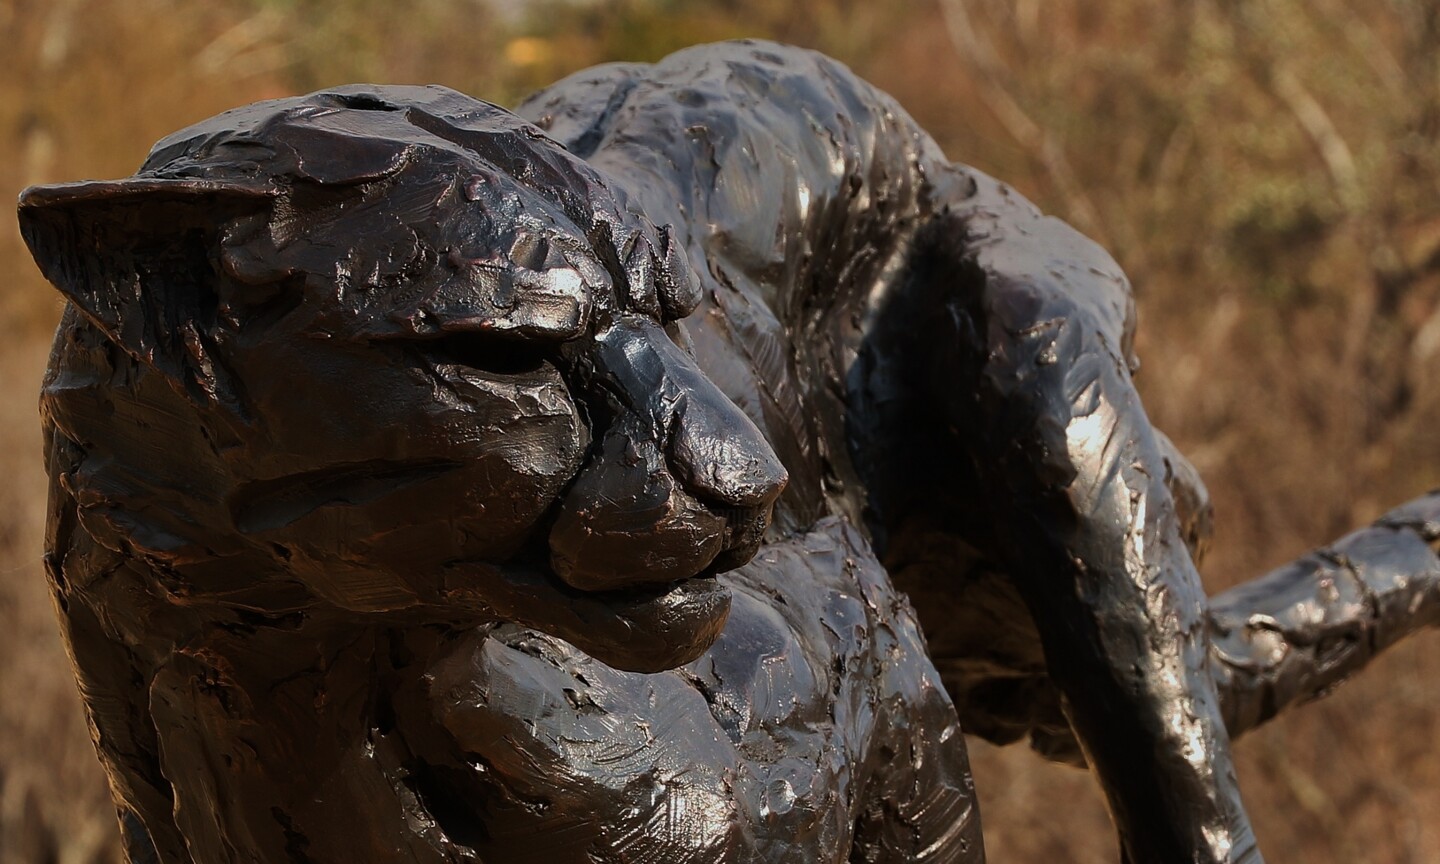 Cheetah Hunting bronze sculpture – Marula Decor